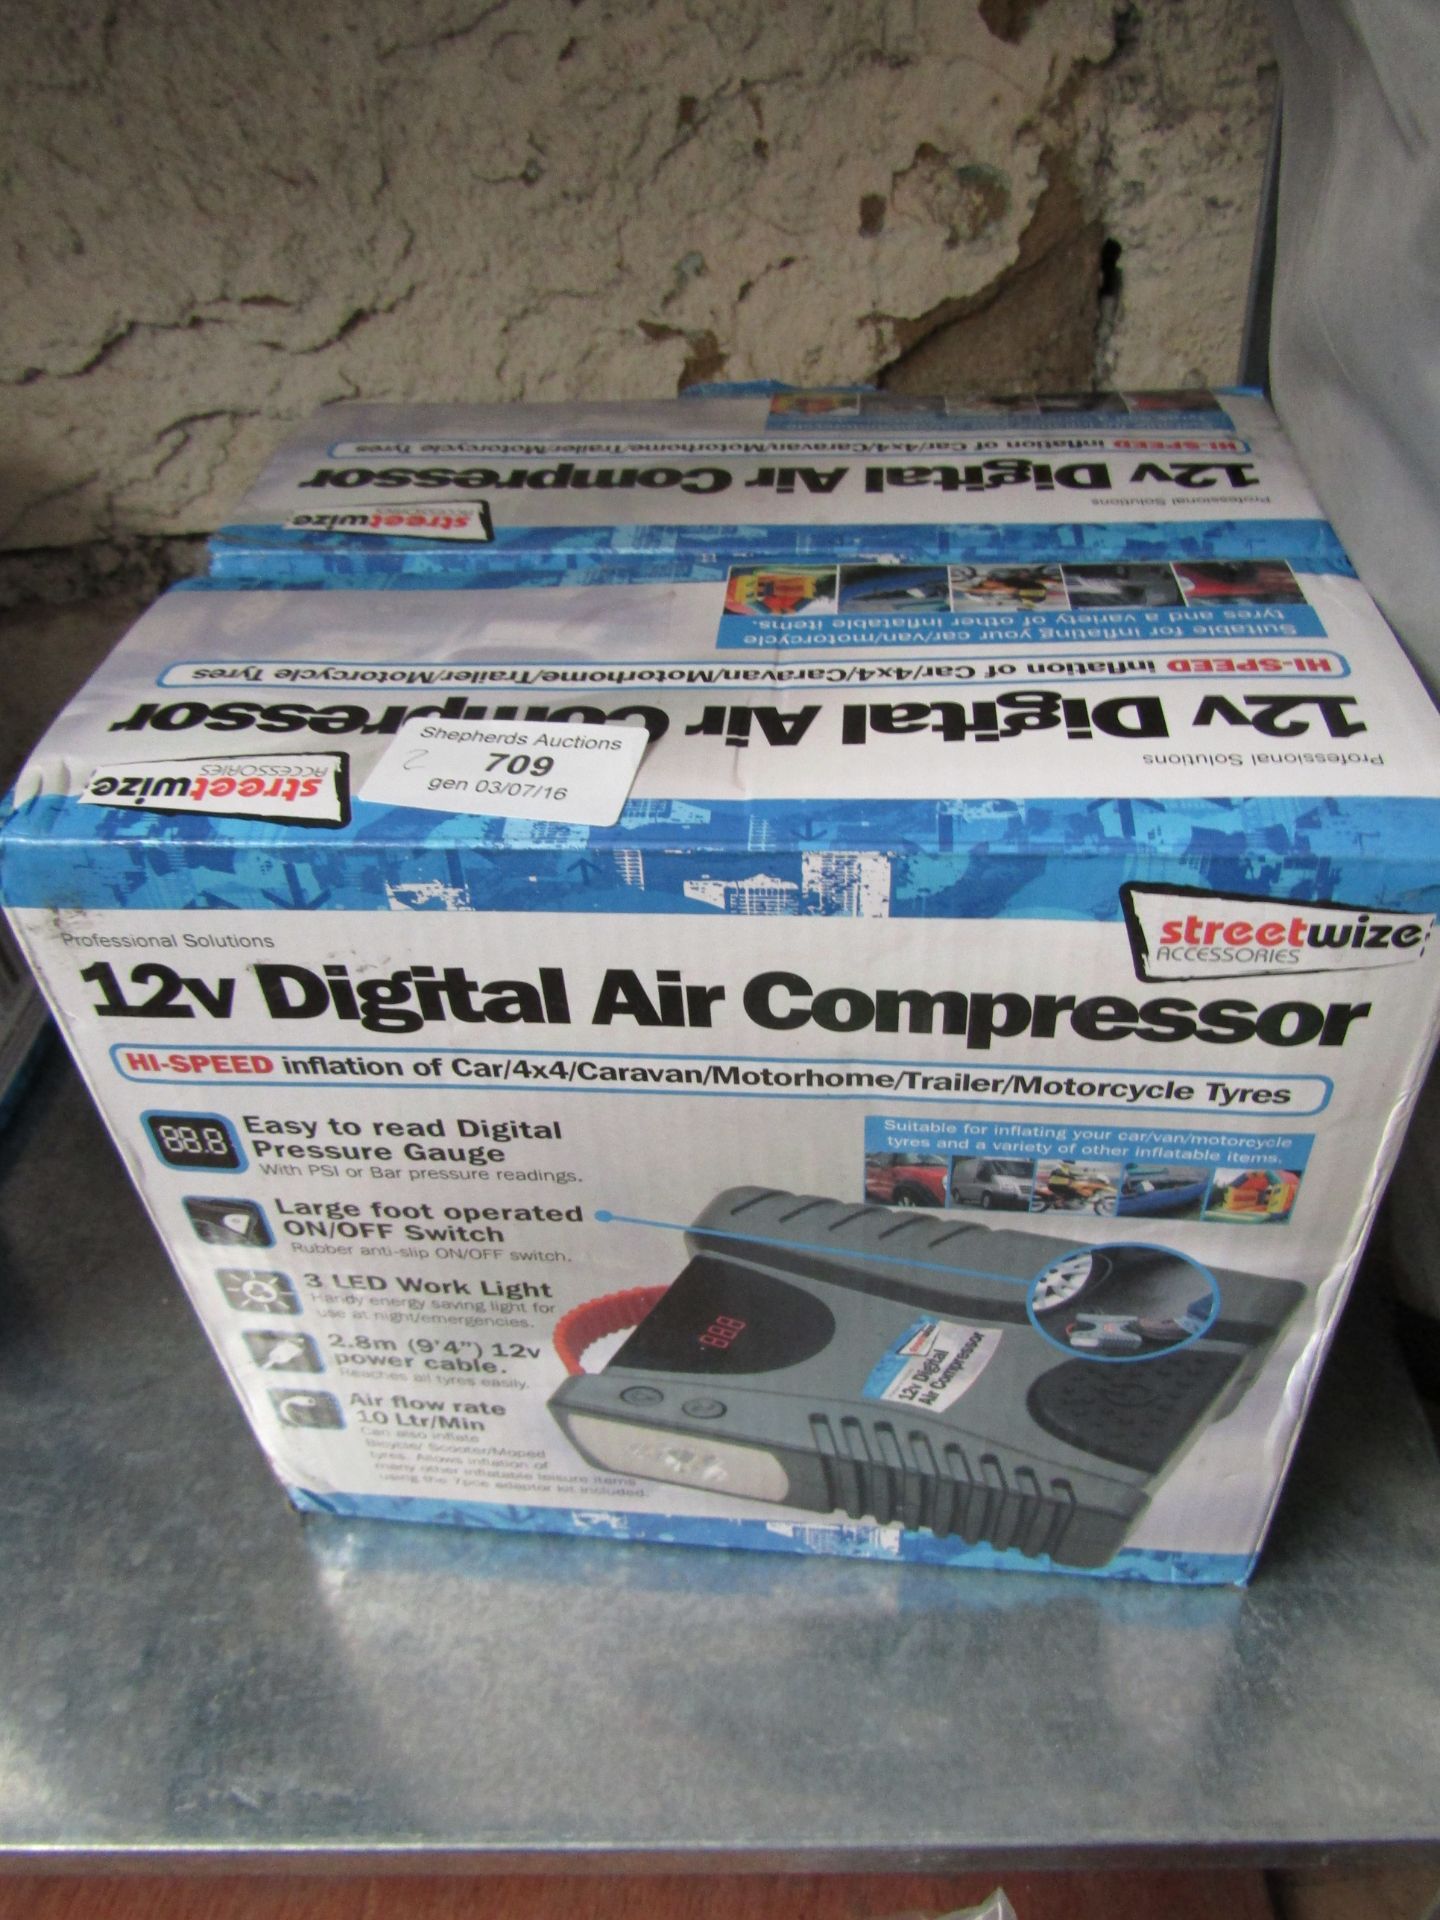 2x StreetWize 12V Air Compressor. Boxed.